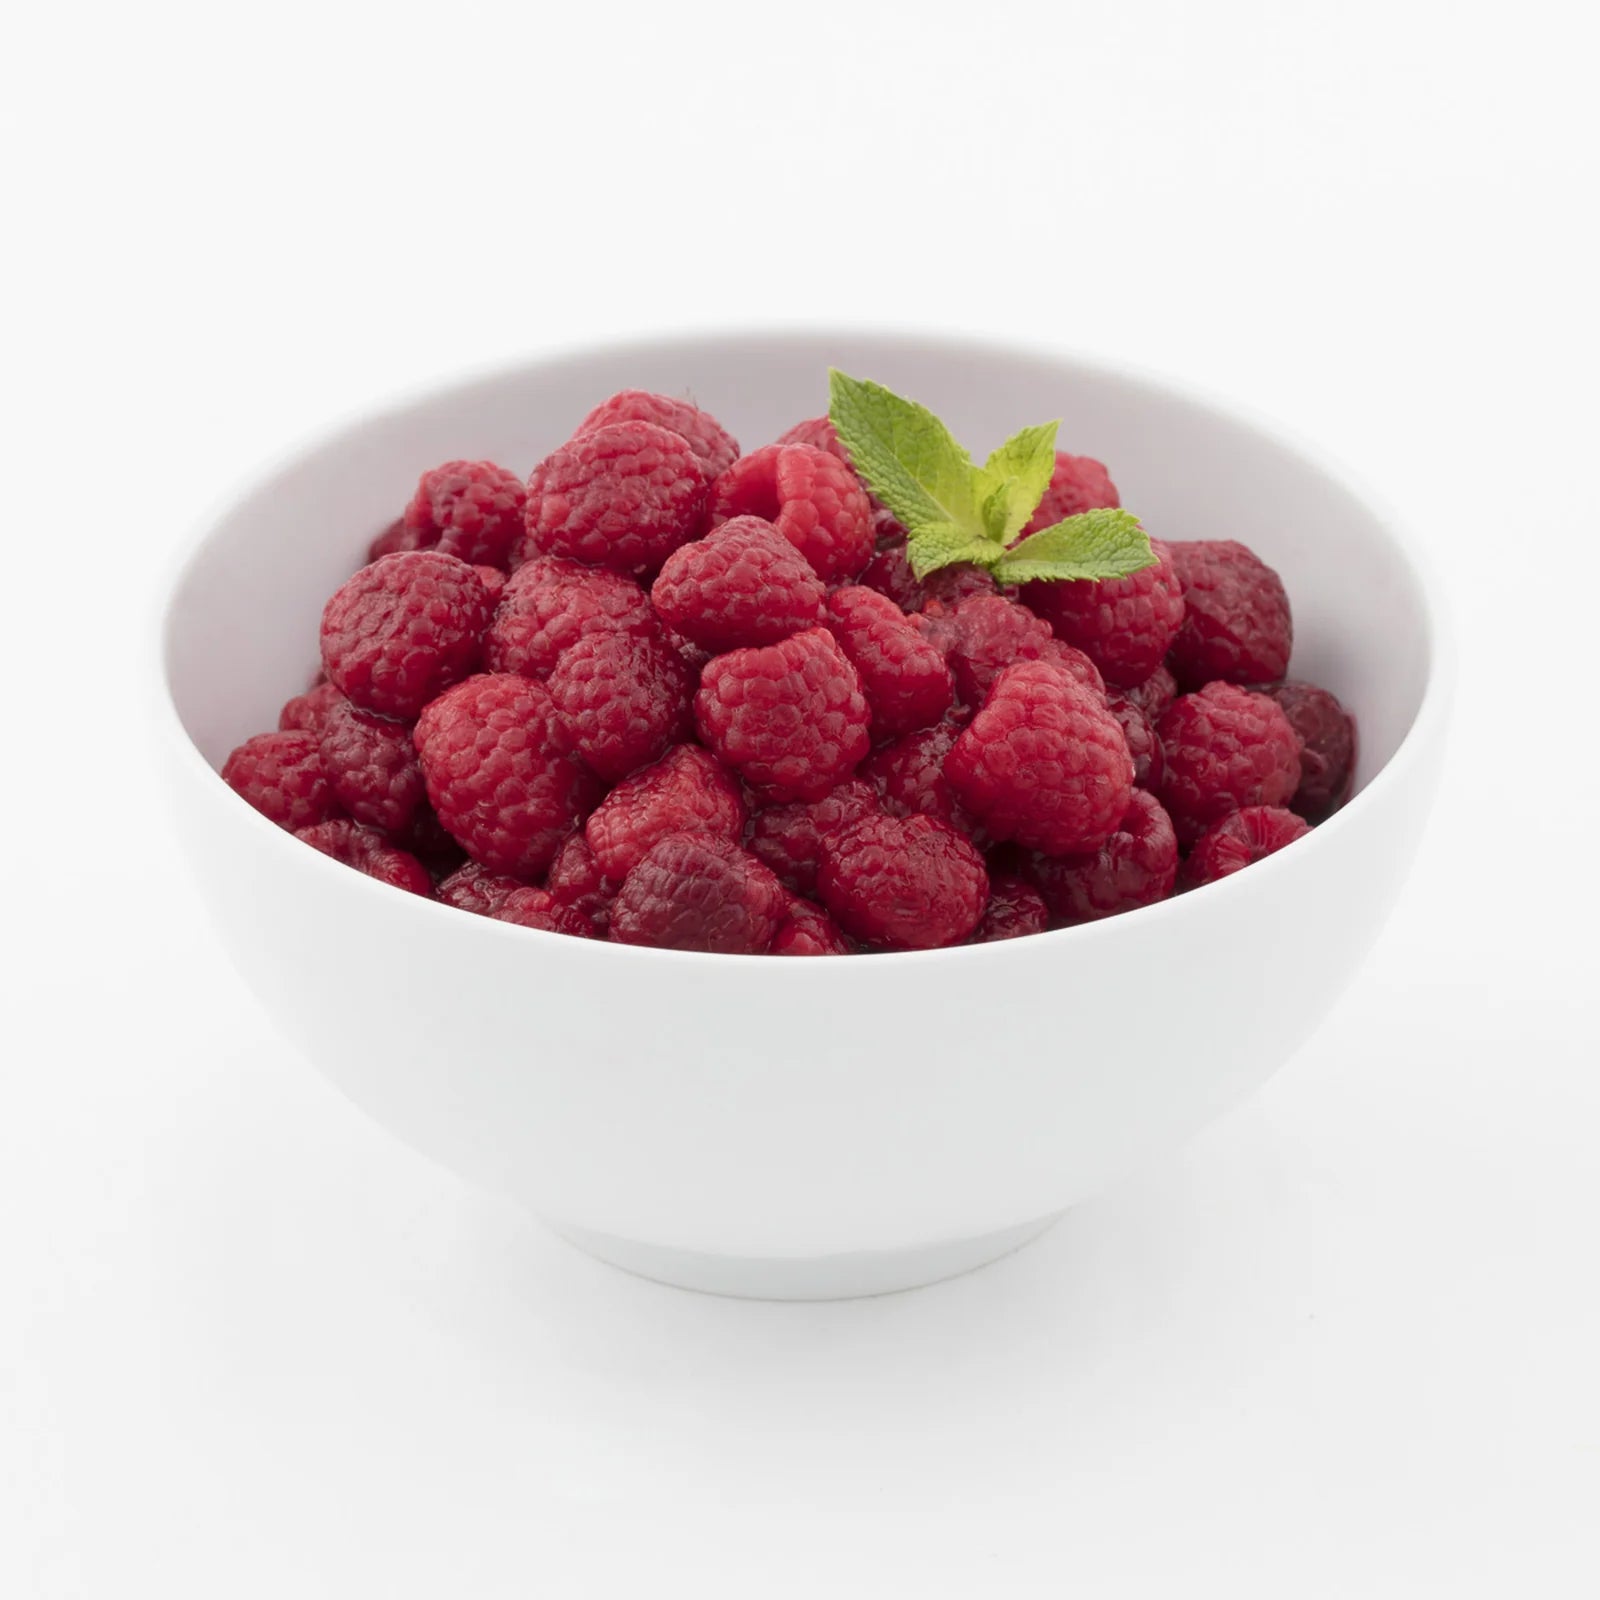 Below Zero - IQF Whole Raspberries